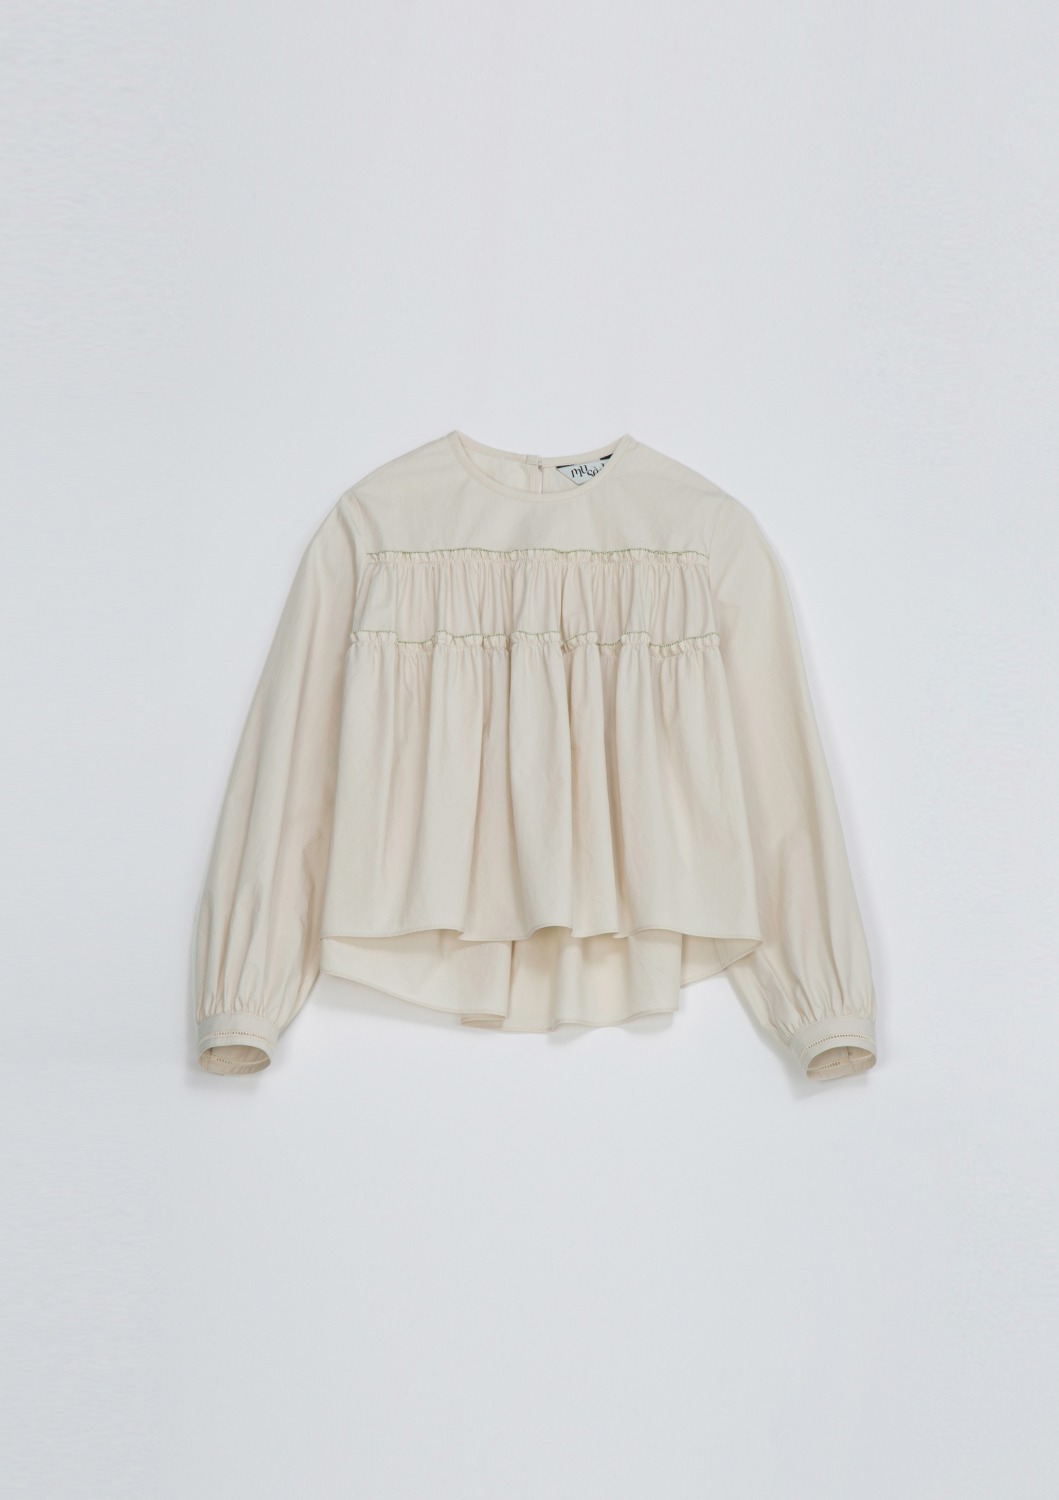 [End Sale]Agreable Tierd Blouse - Ivory Cotton